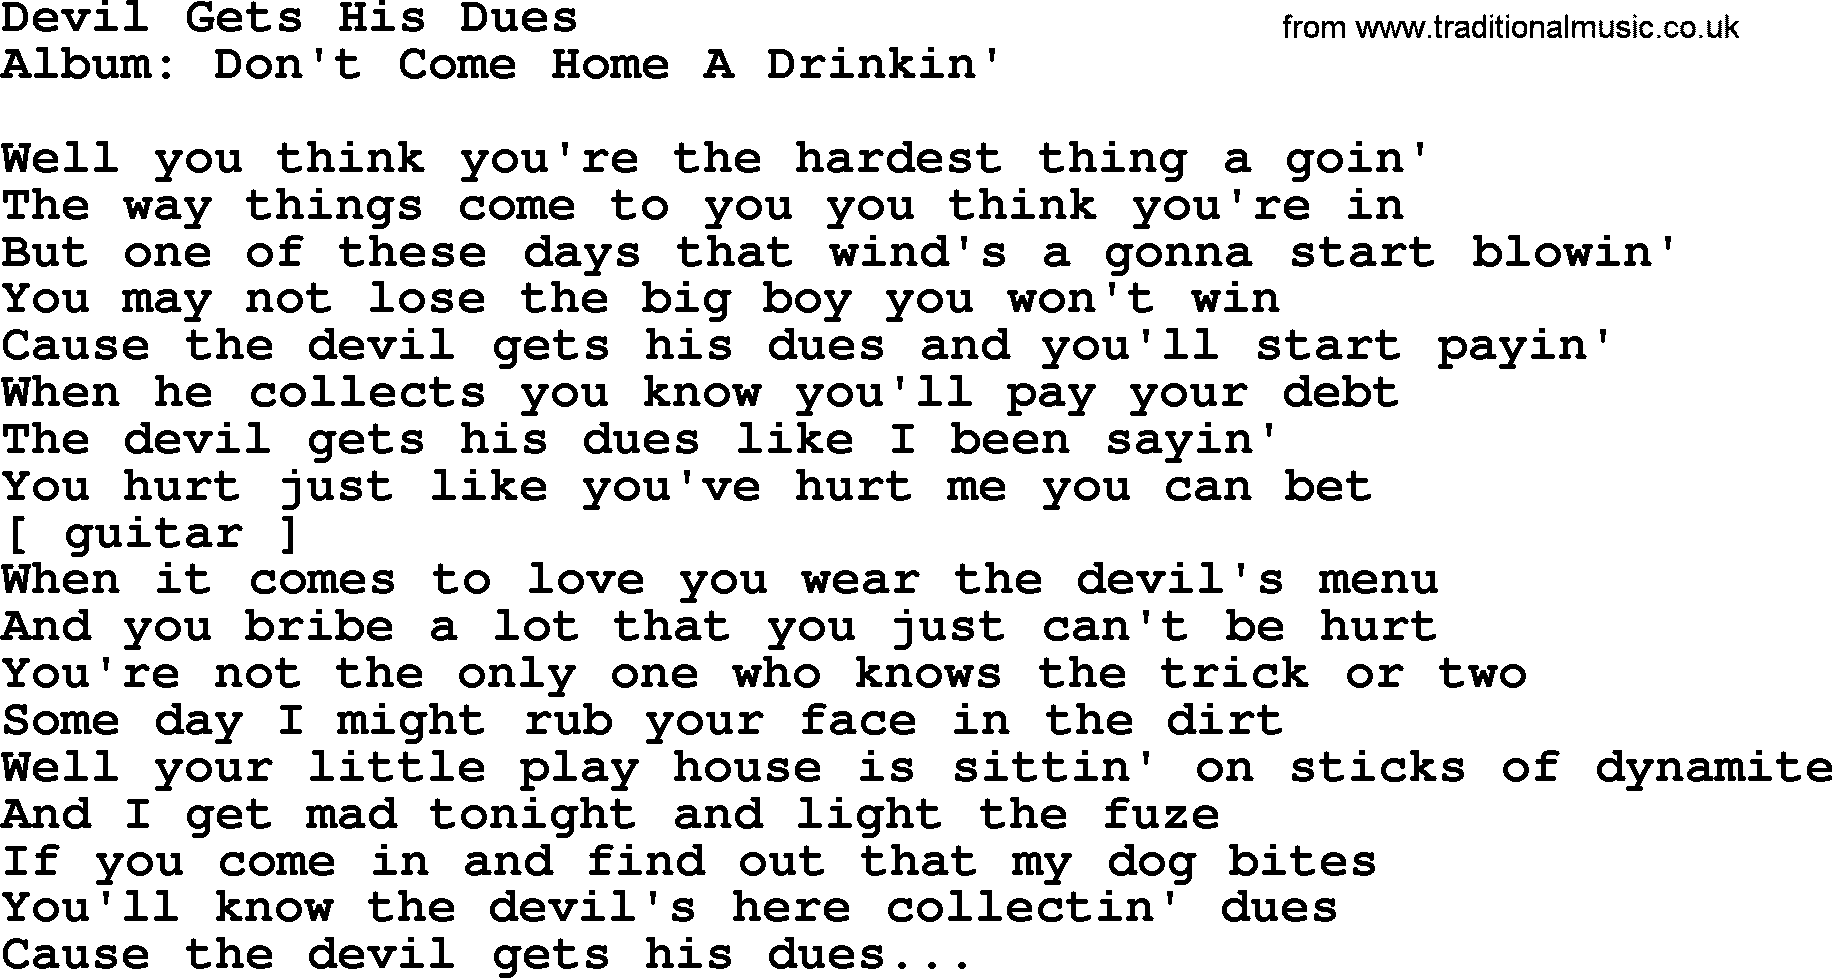 Loretta Lynn song: Devil Gets His Dues lyrics